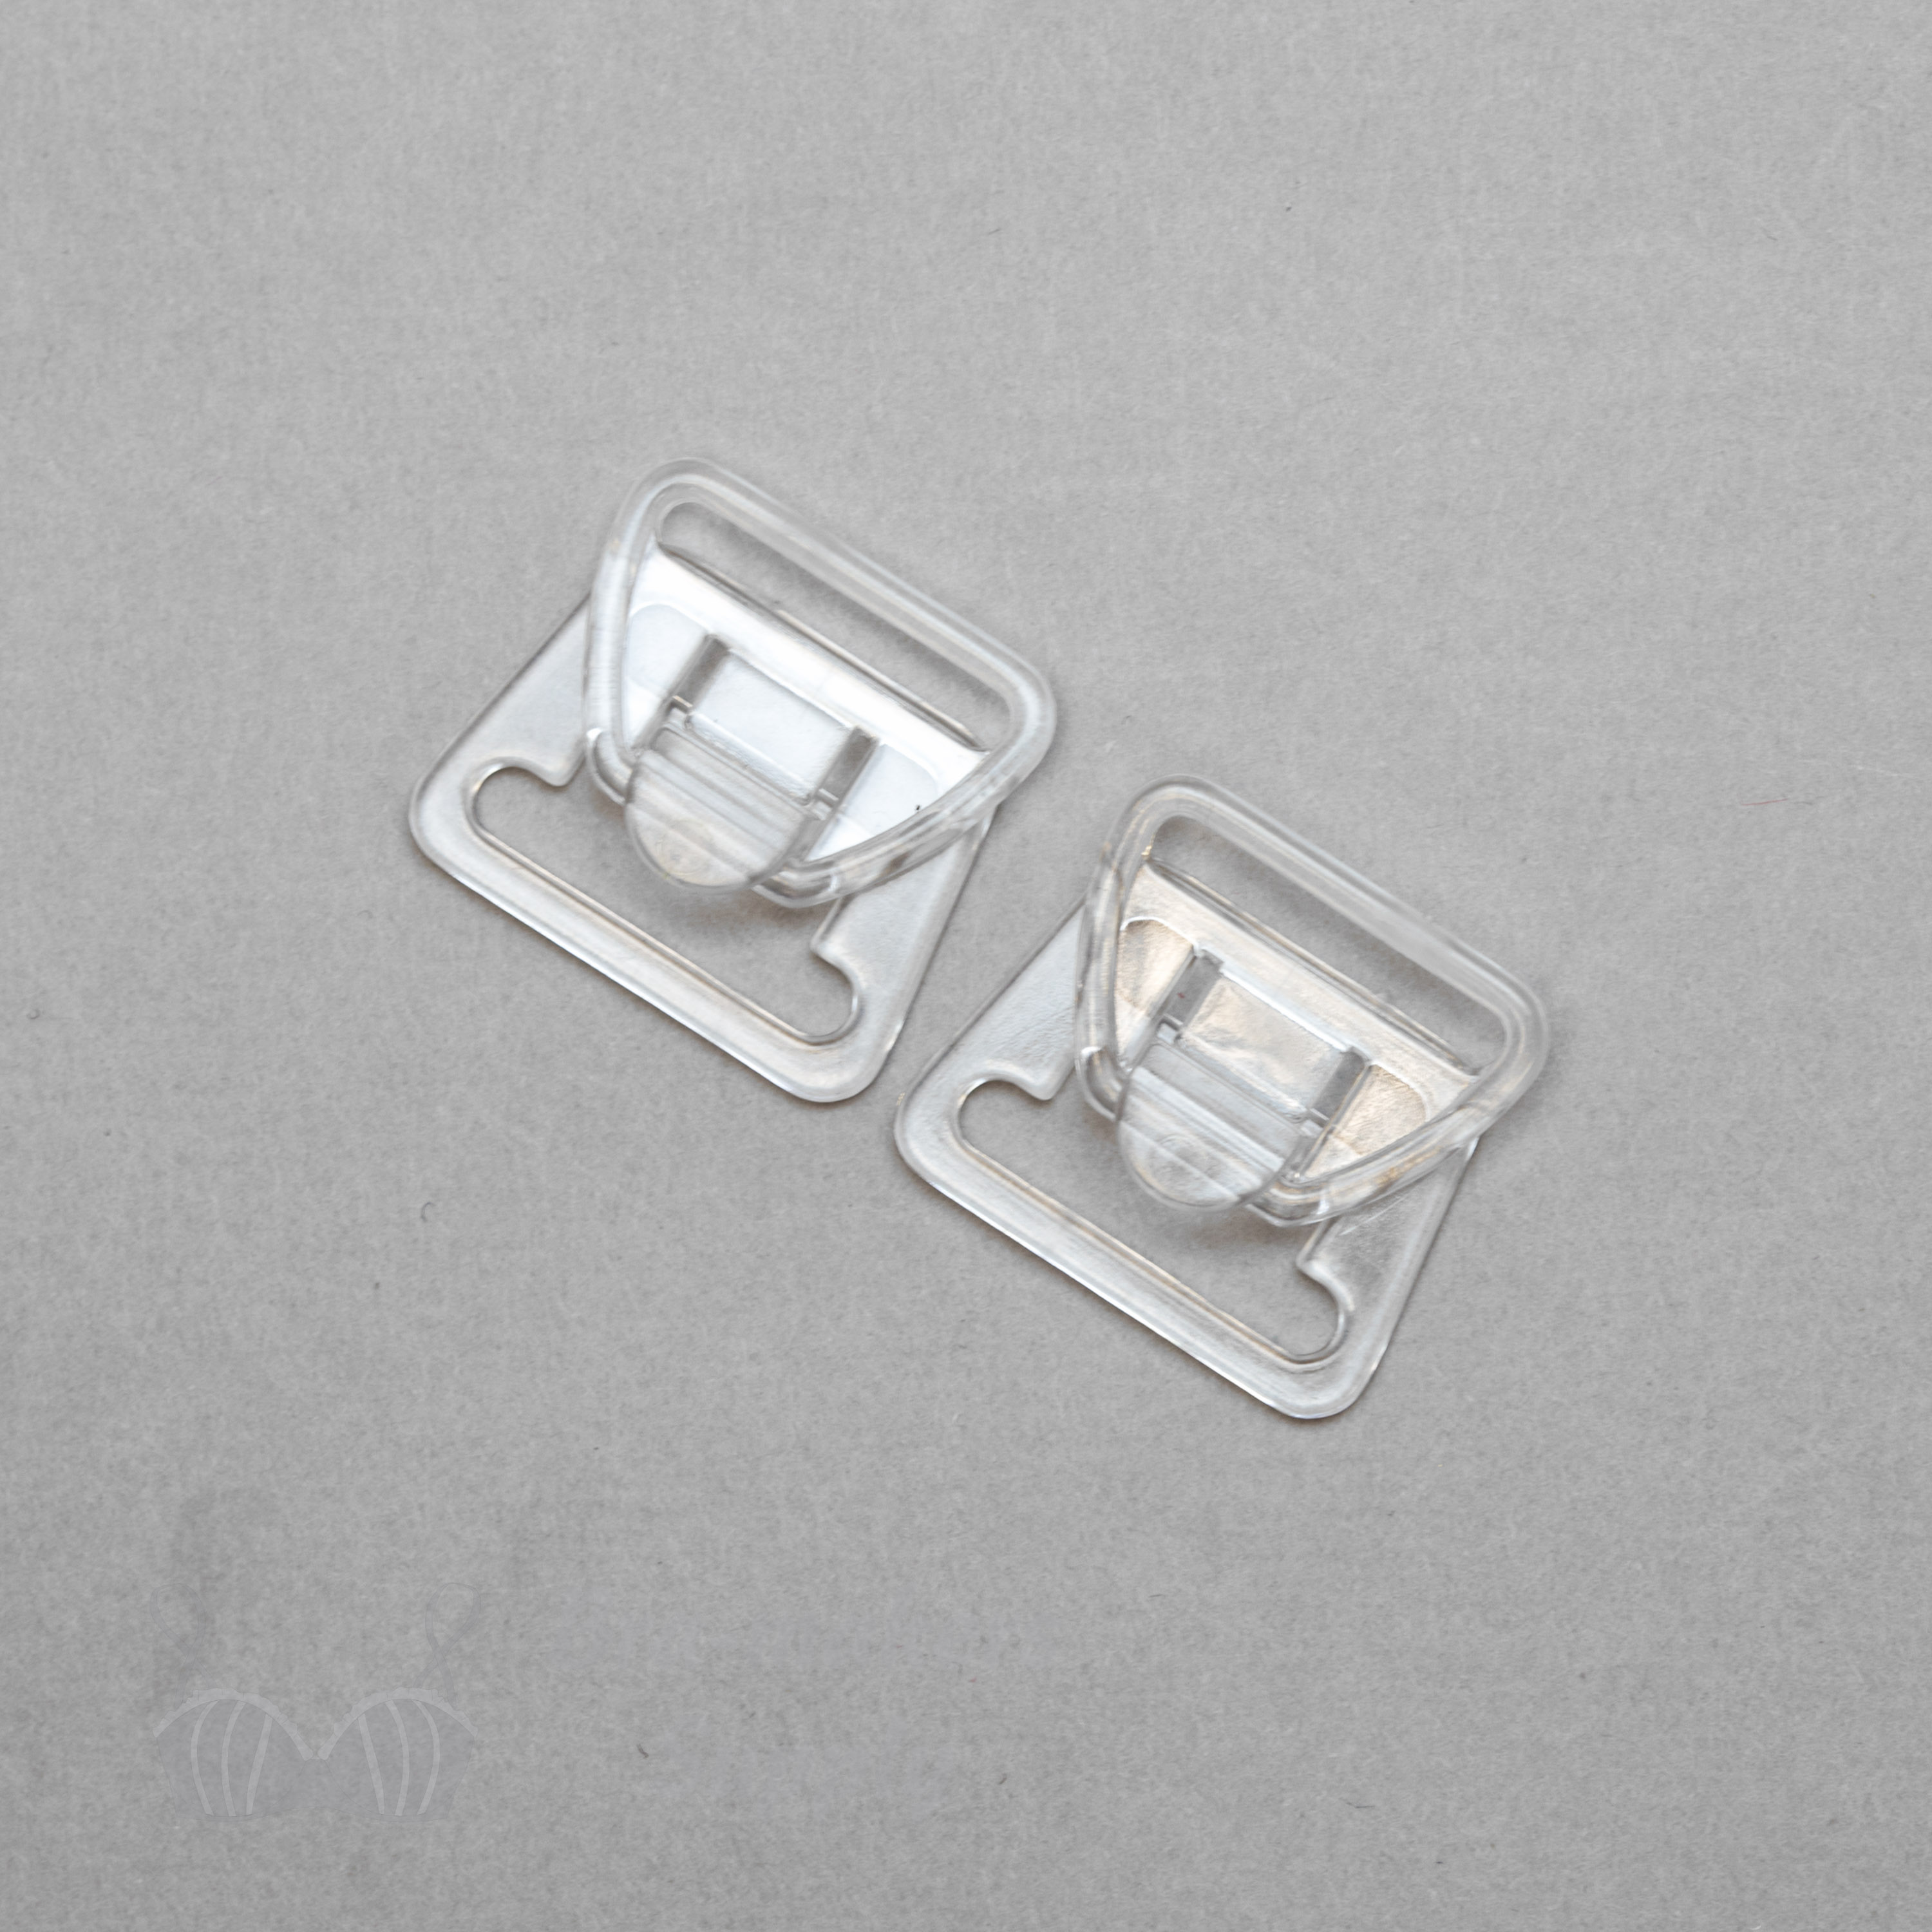 Nursing bra clips, 12mm - Small Bobbins